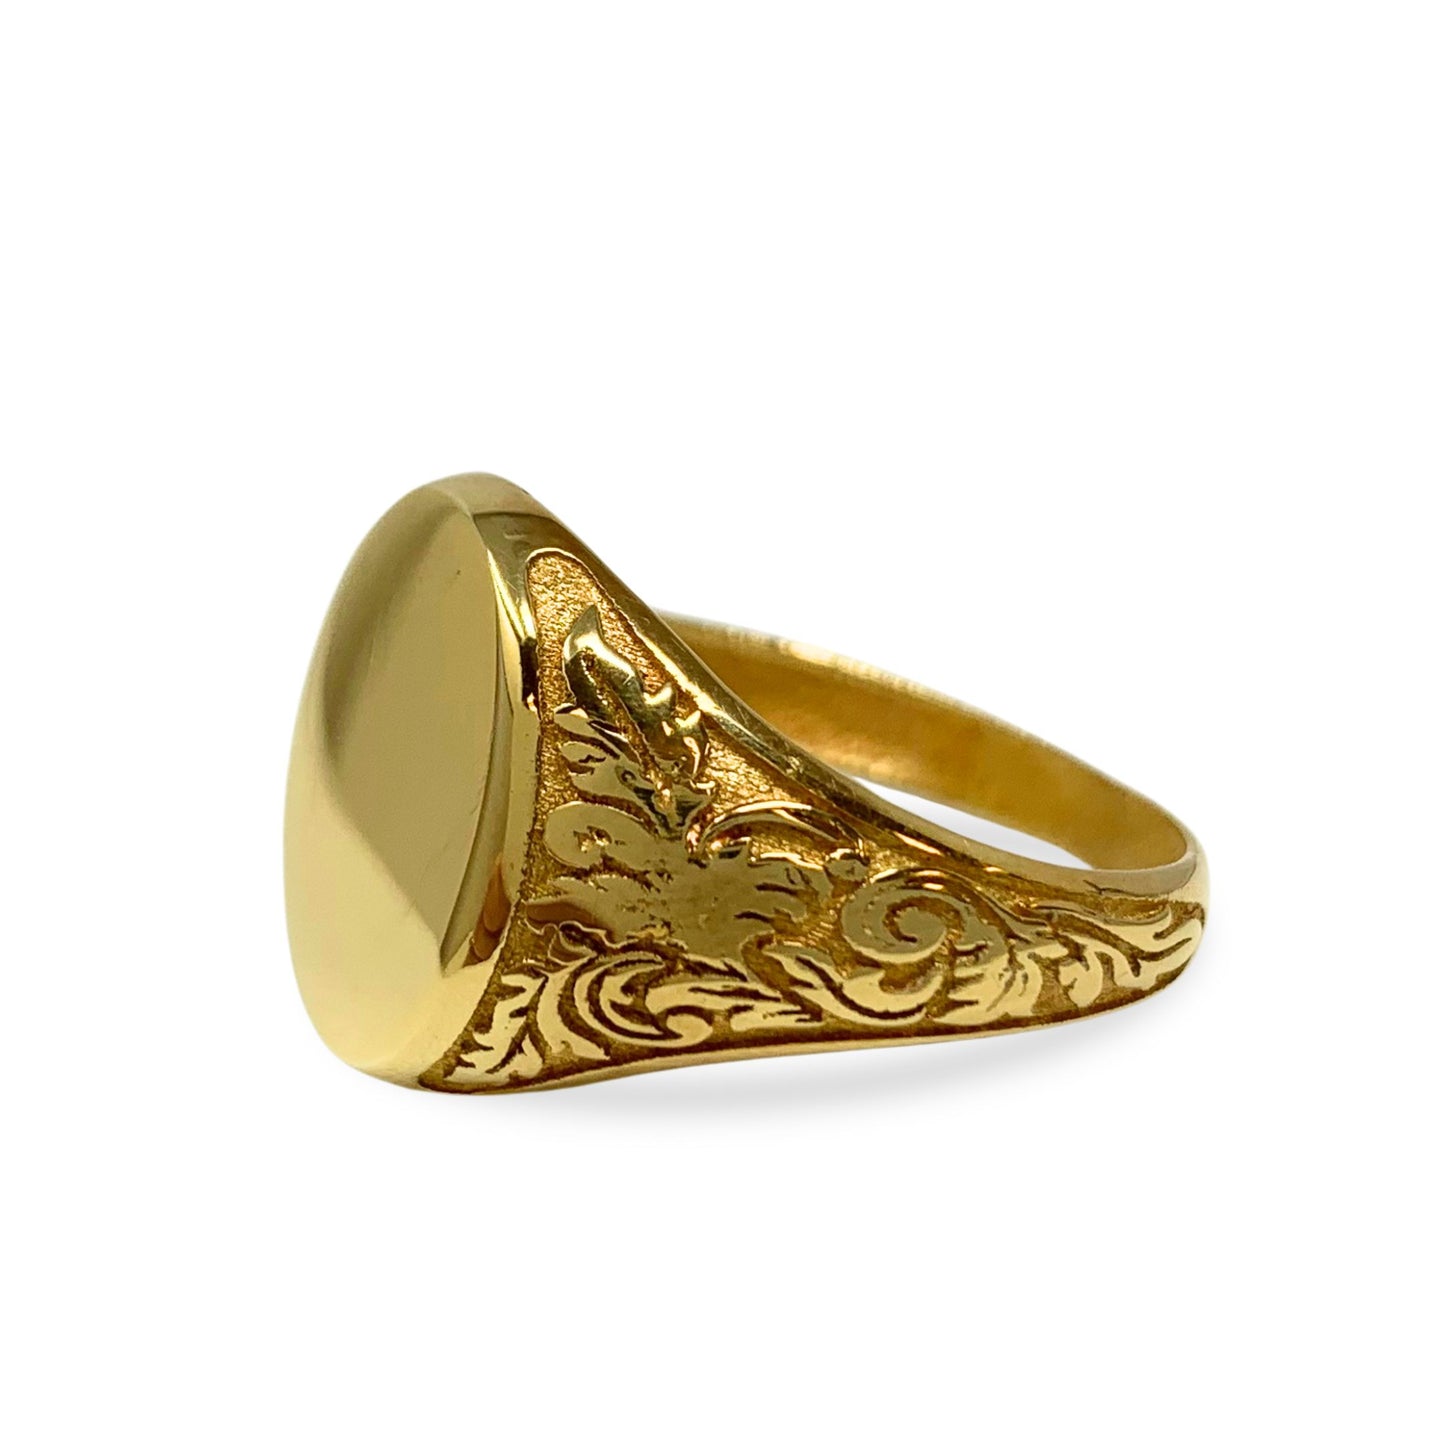 Italian 14K Gold Blank Signet Ring - Size 12